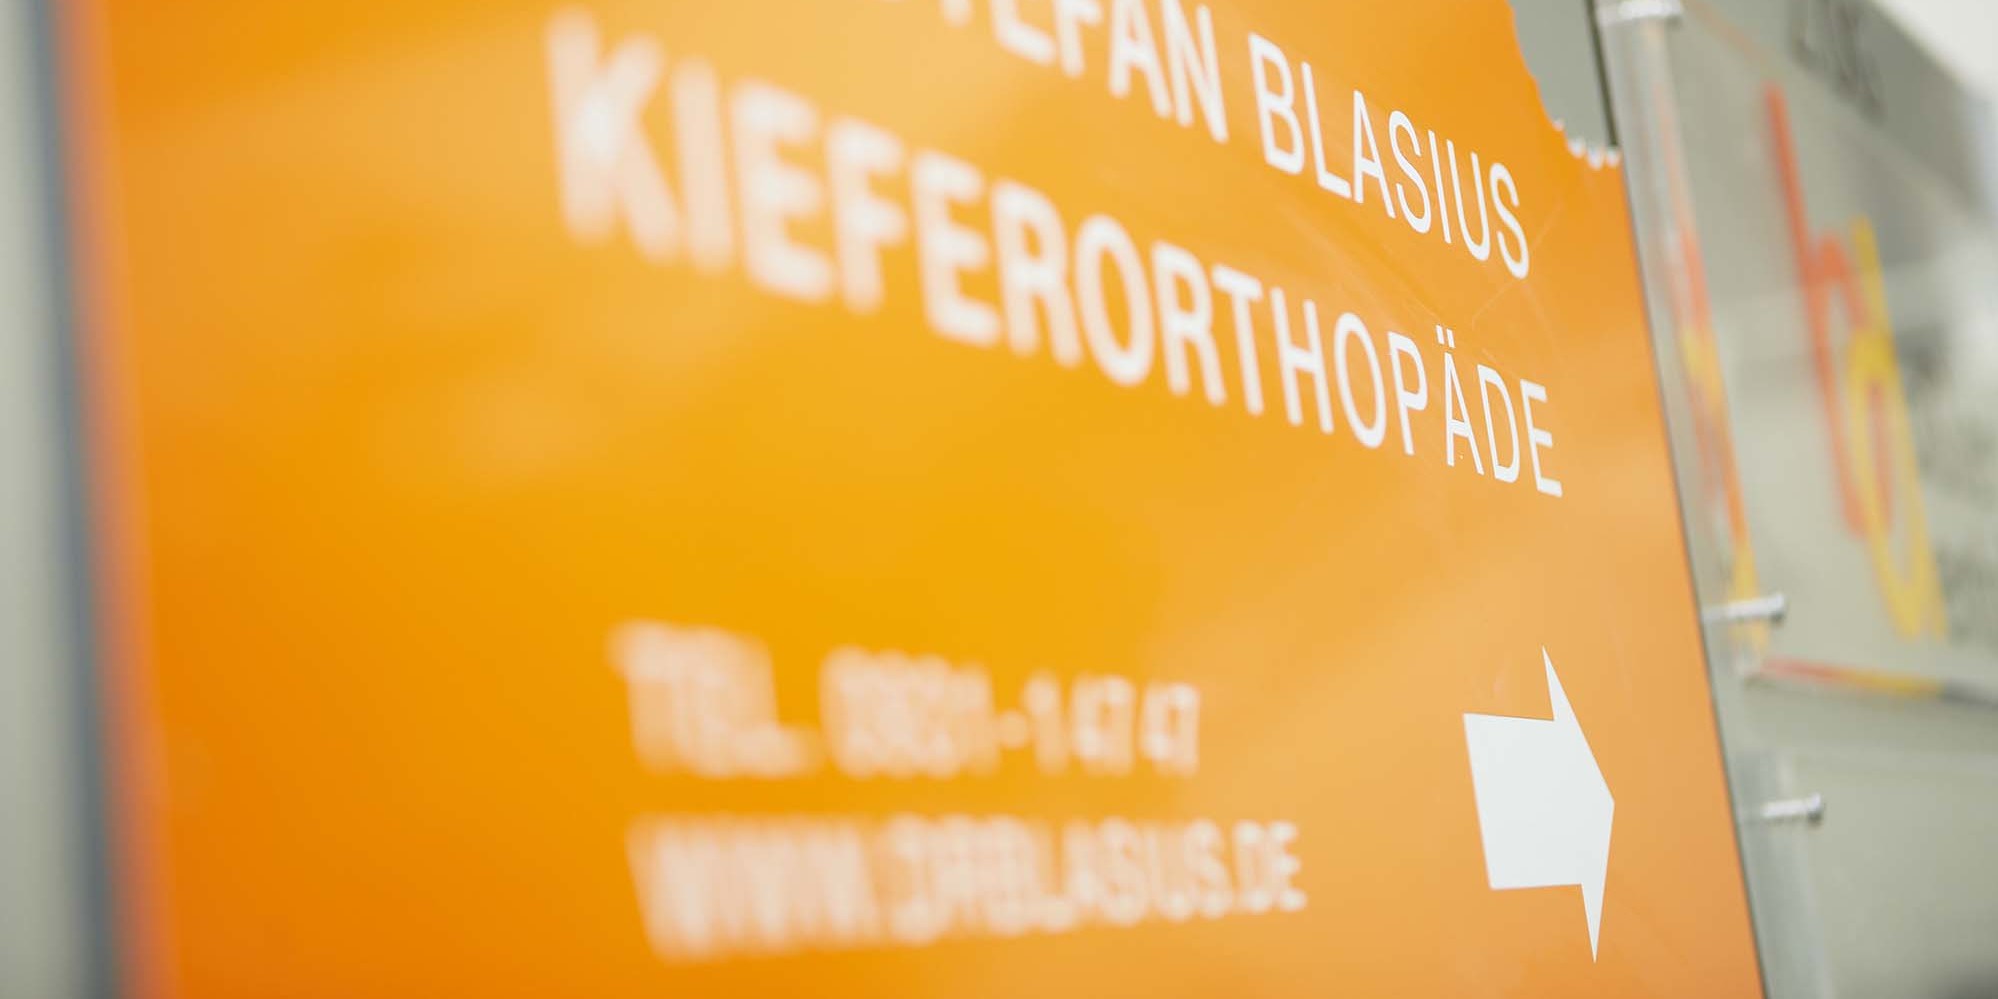  Kieferorthopaede-Blasius-Wuerzburg-Kontakt-anfahrt-9285.jpg